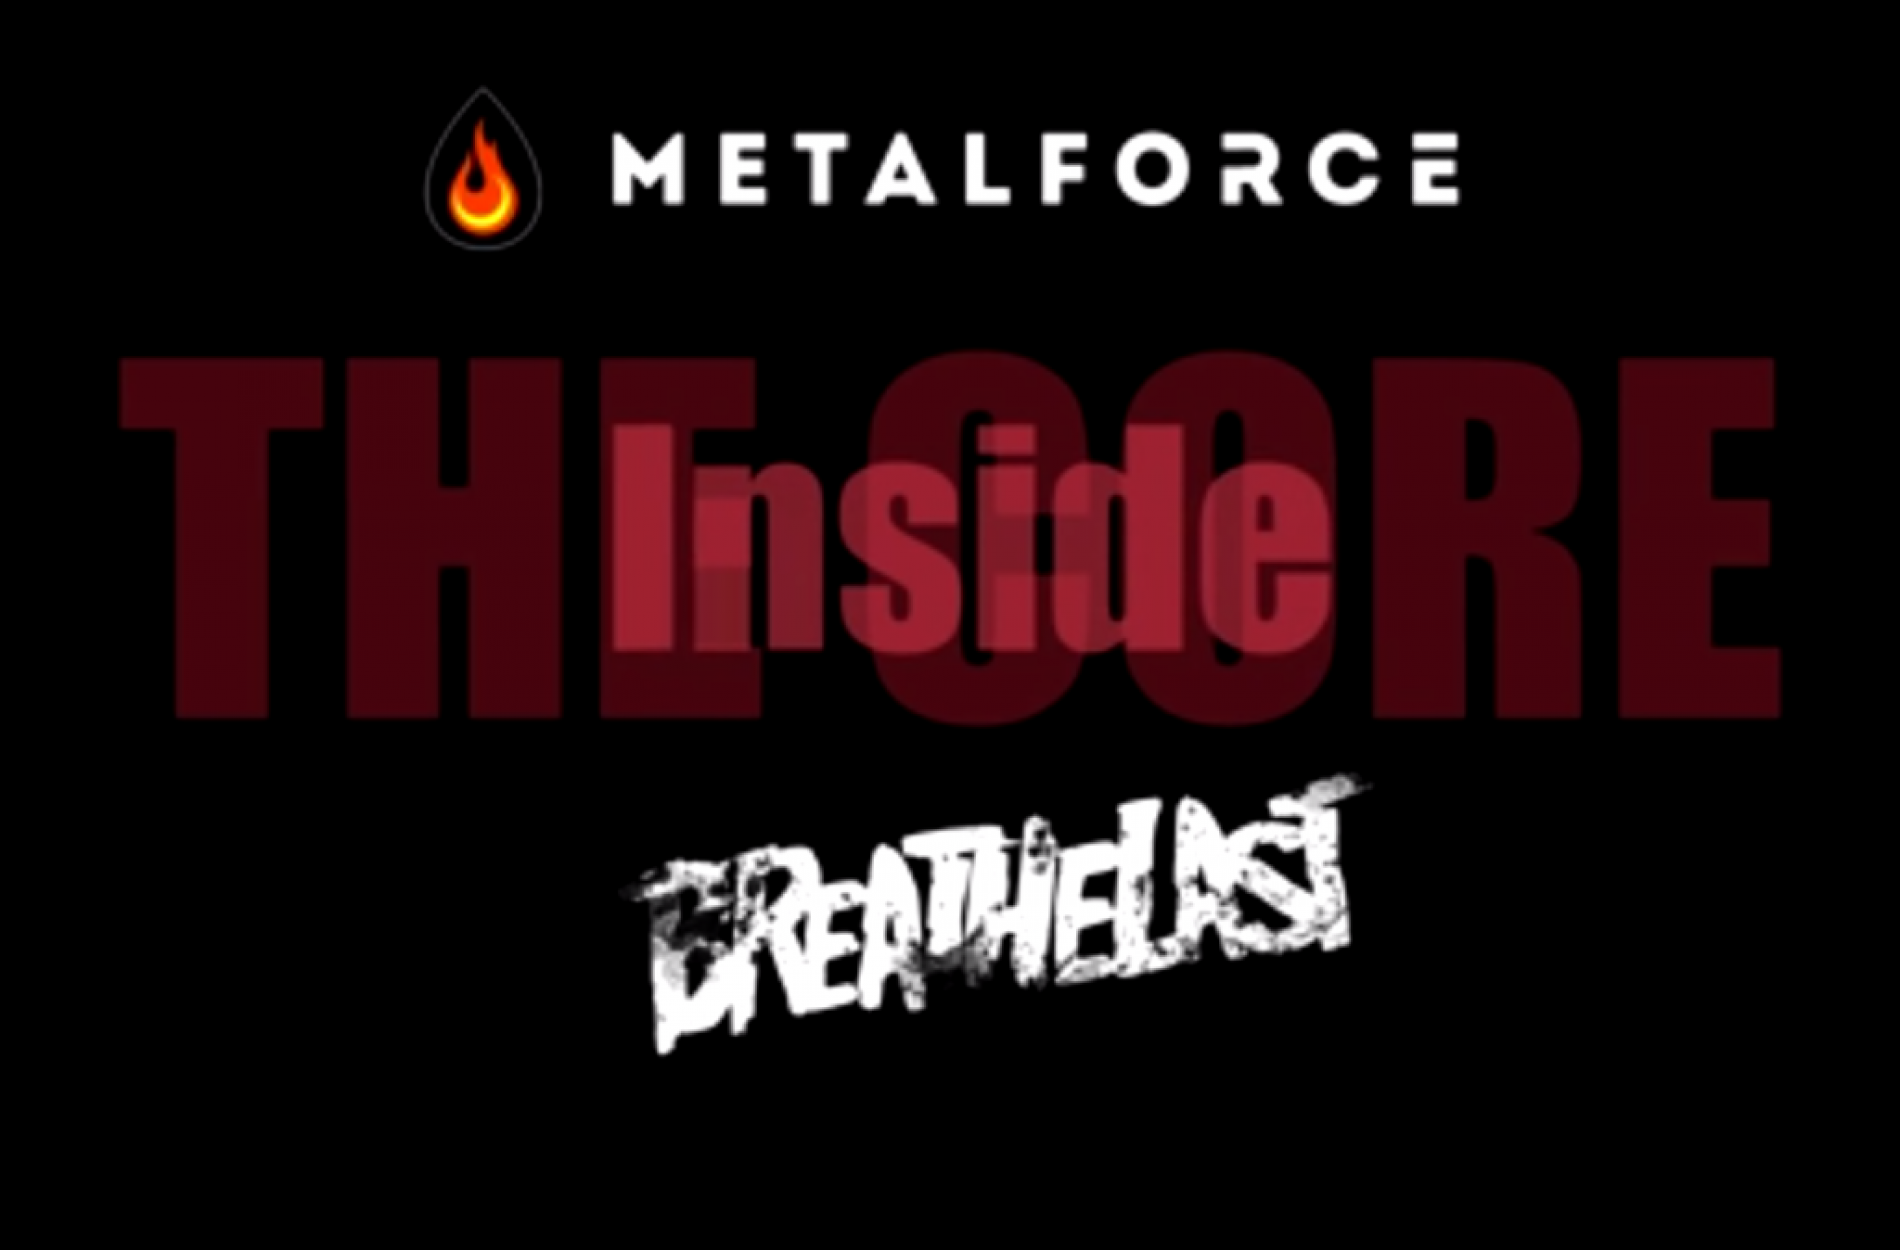 Inside The Core #2: Breathelast (interviu Metalforce)